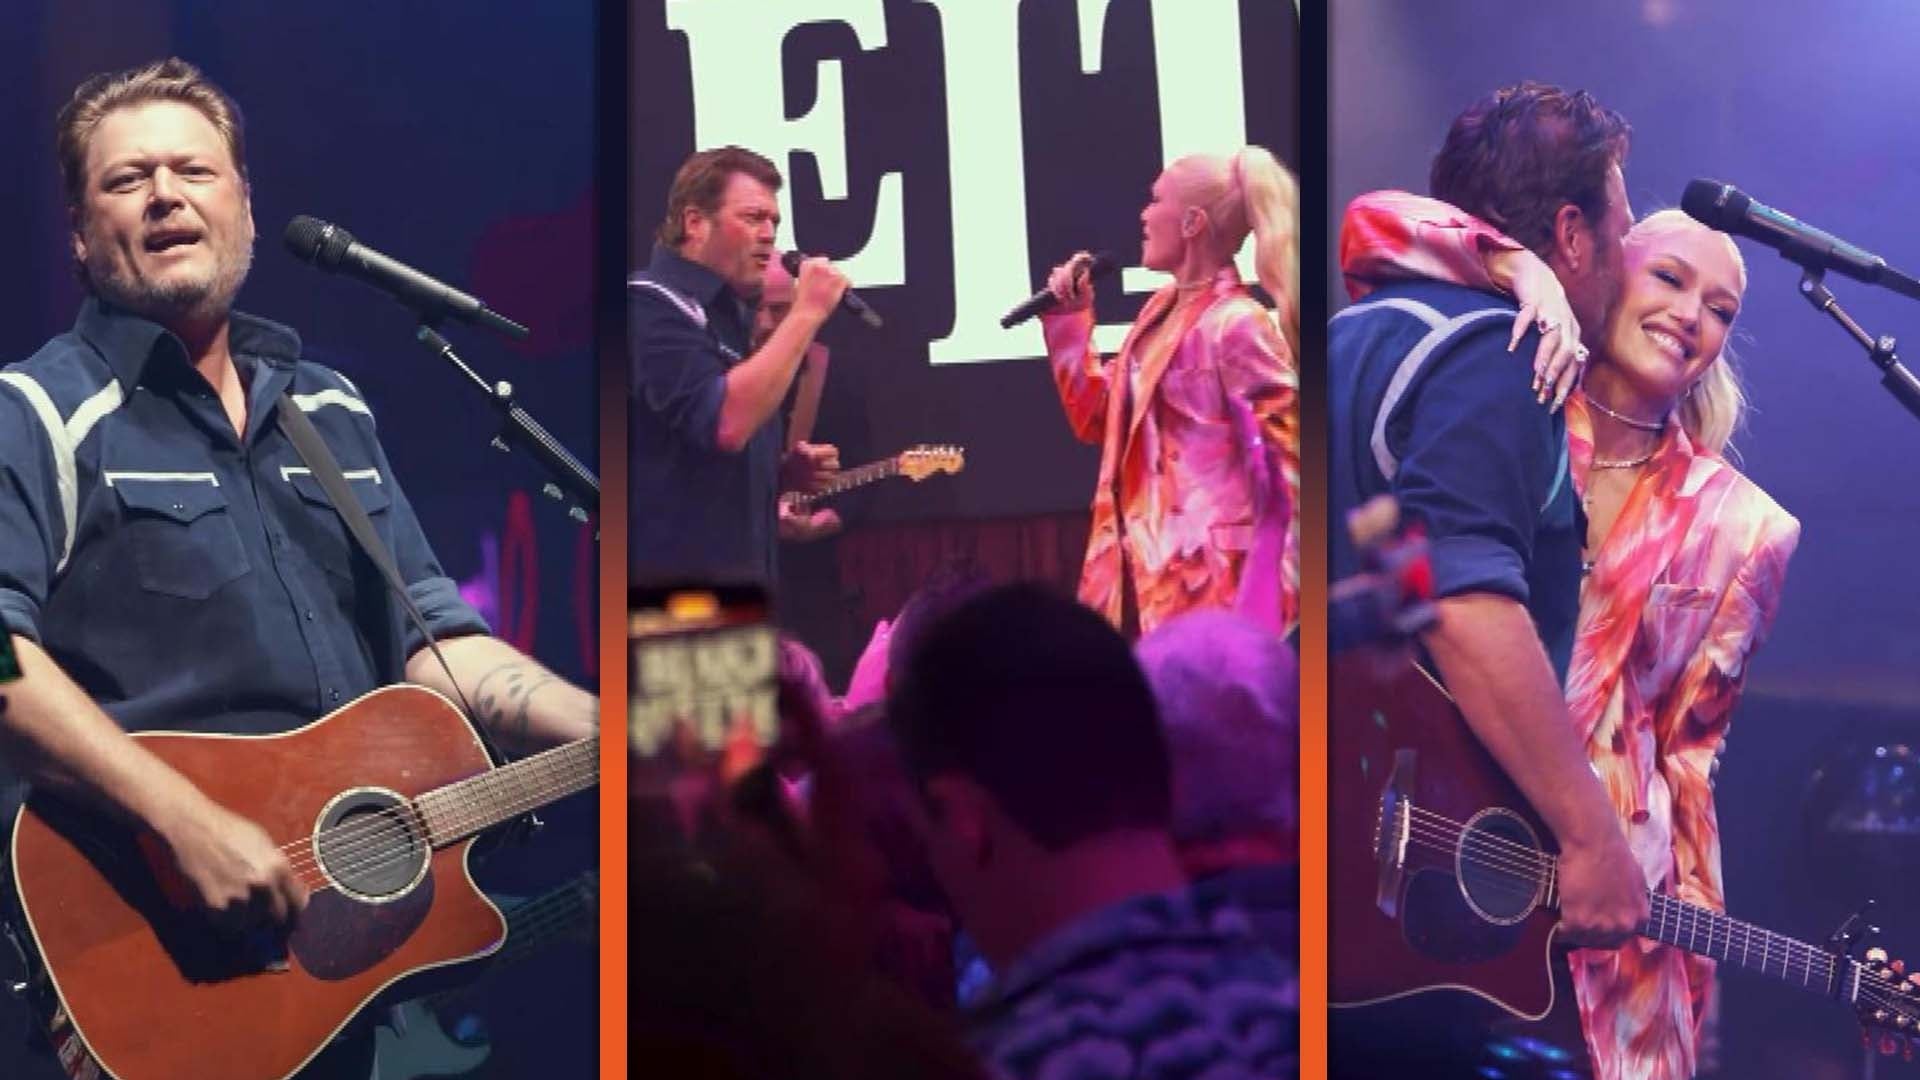 Watch Blake Shelton and Gwen Stefani perform a surprise concert at his Las Vegas bar!